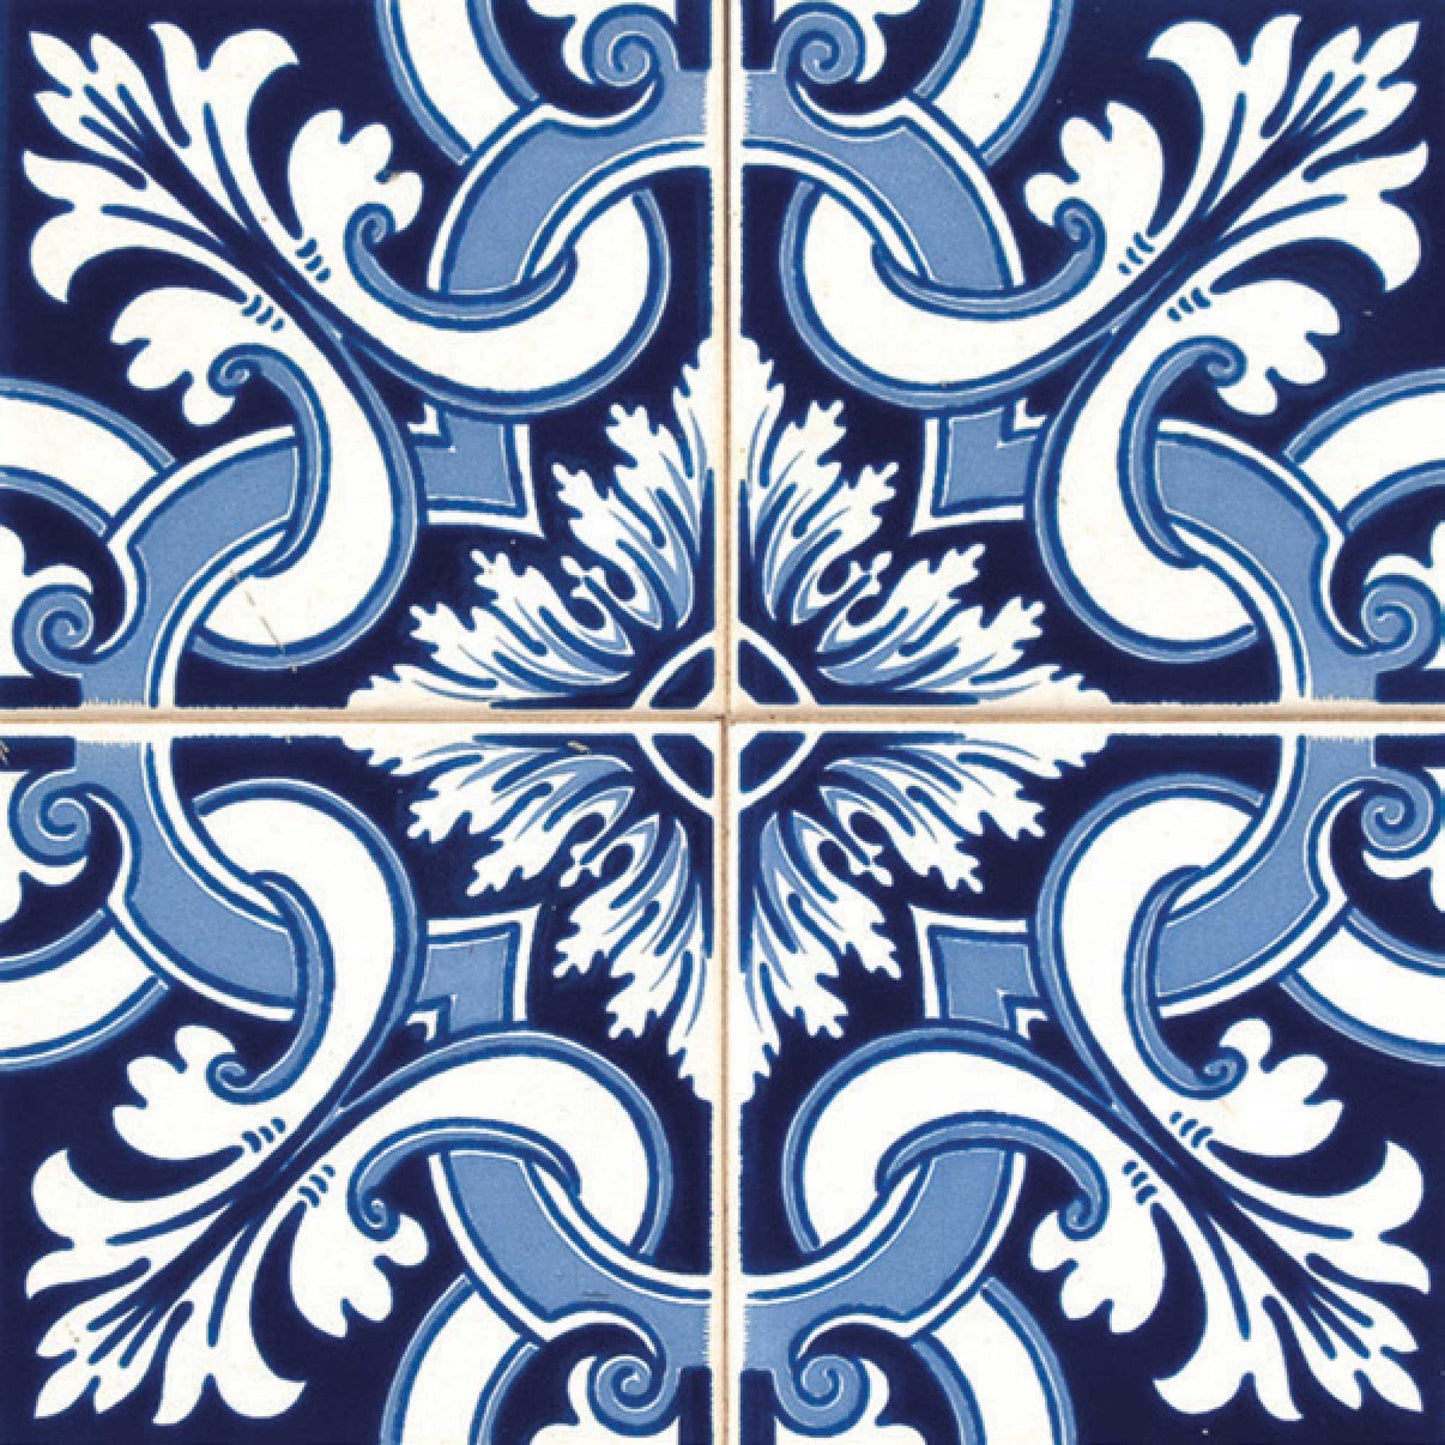 7" X 7" Blue Multi Mosaic Peel and Stick Tiles